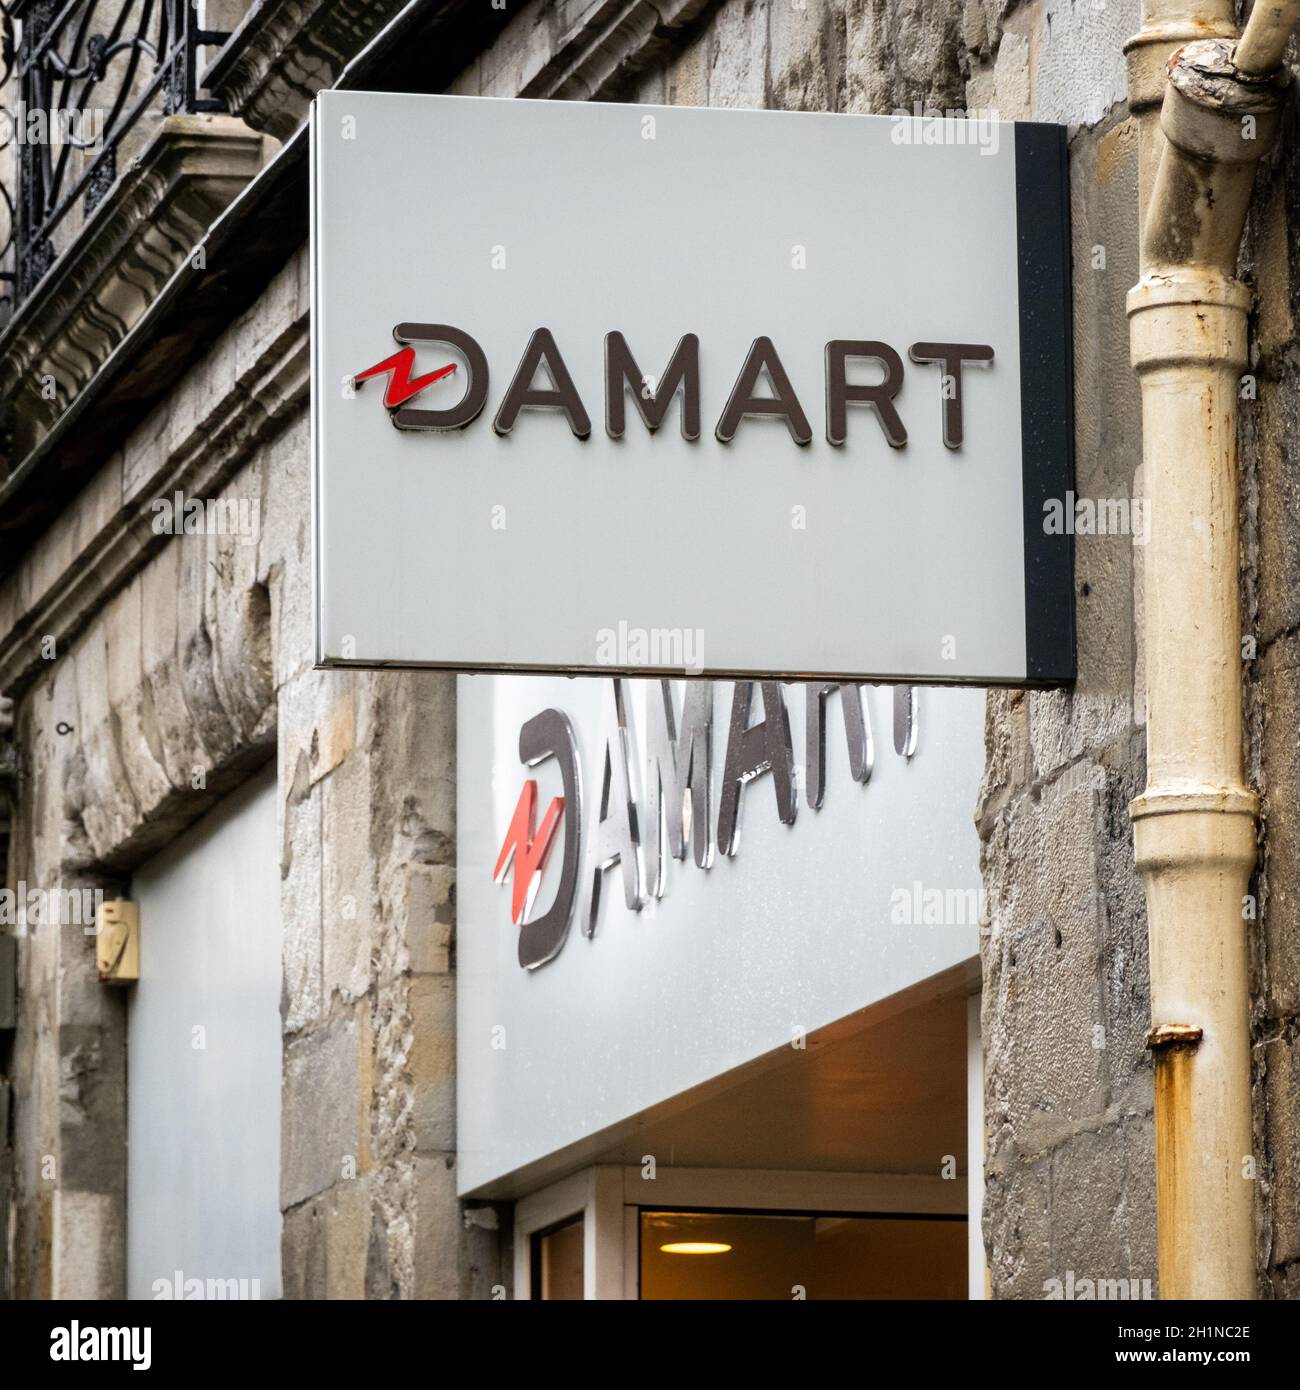 Damart logo hi-res stock photography and images - Alamy